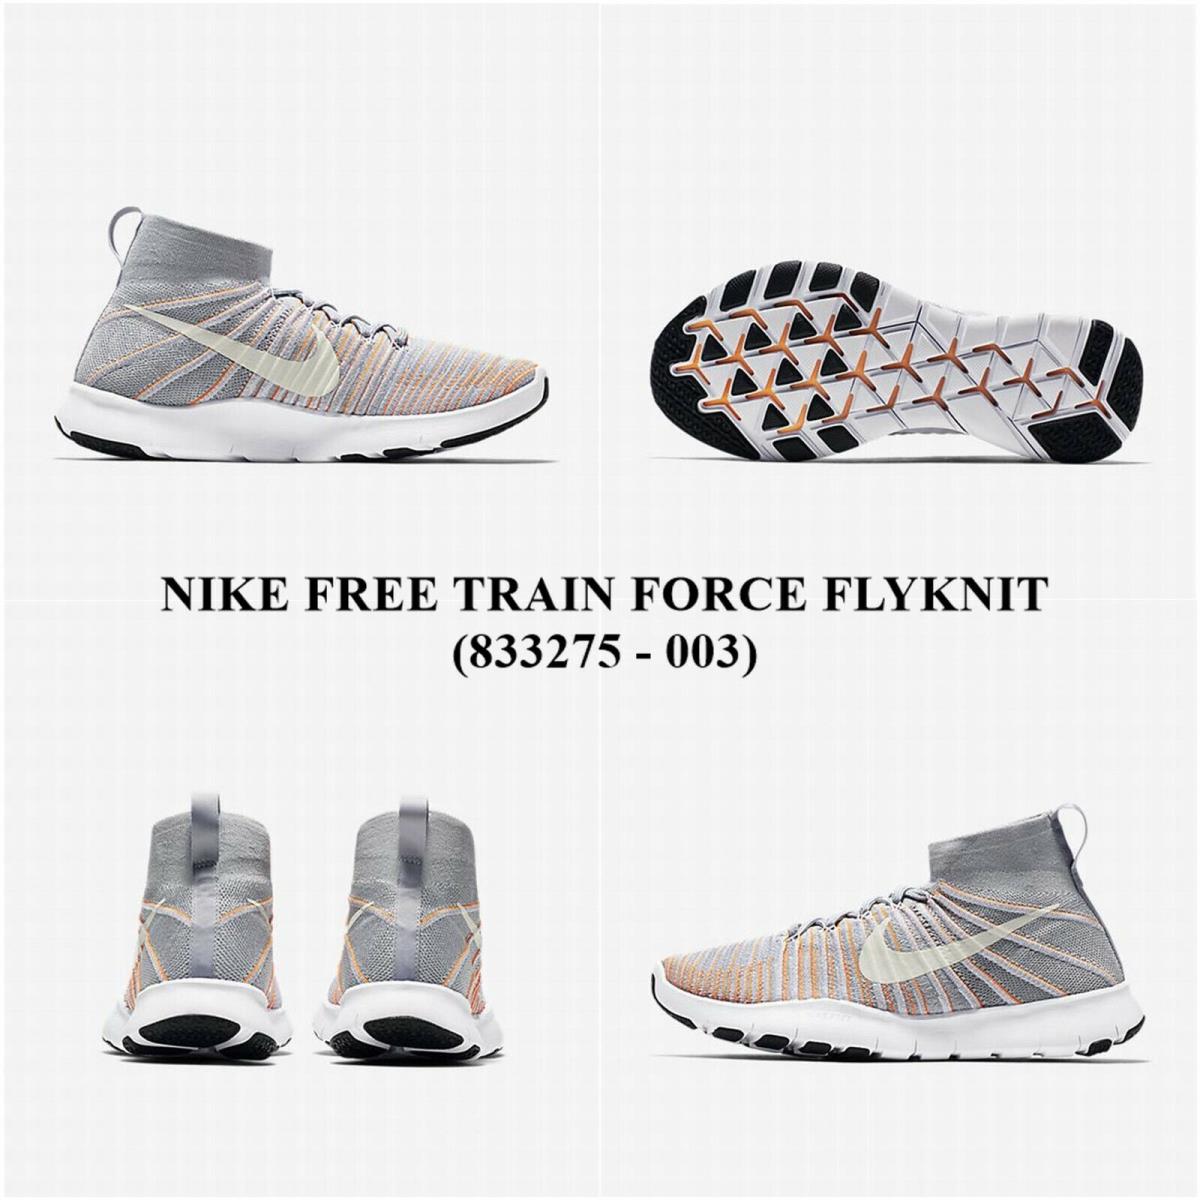 Nike Men`s Free Train Force Flyknit 833275 - 003 Trainning Shoes - WOLF GREY / WHITE-TOTAL ORANGE